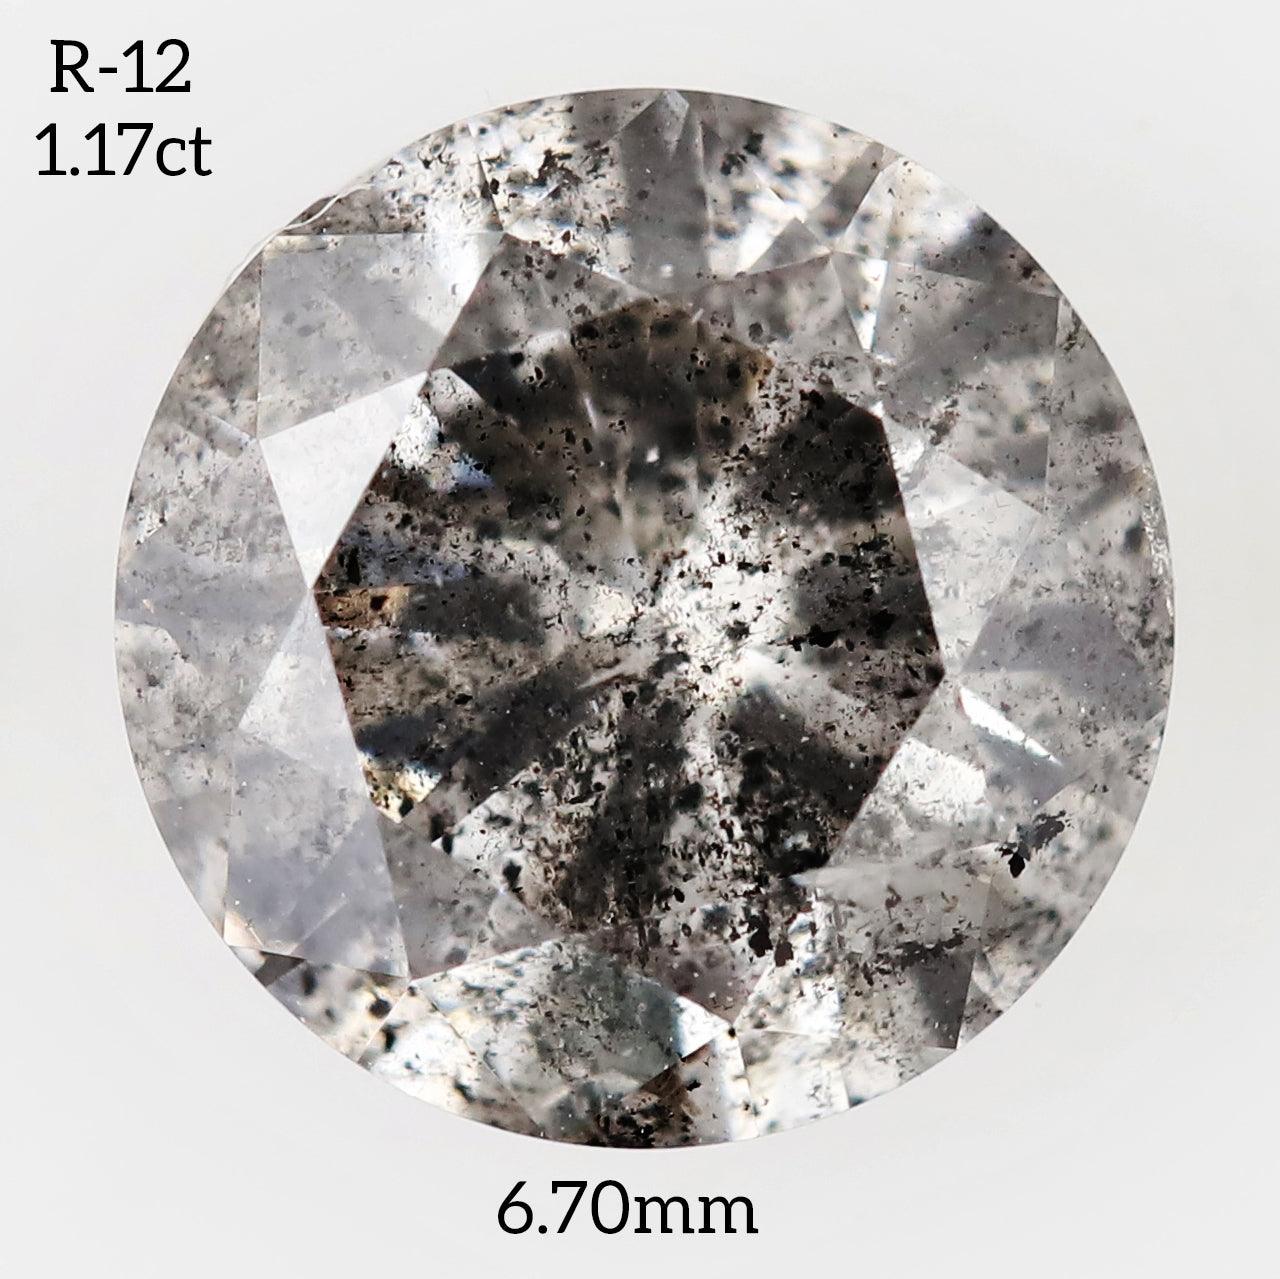 R12 - Salt and pepper round diamond